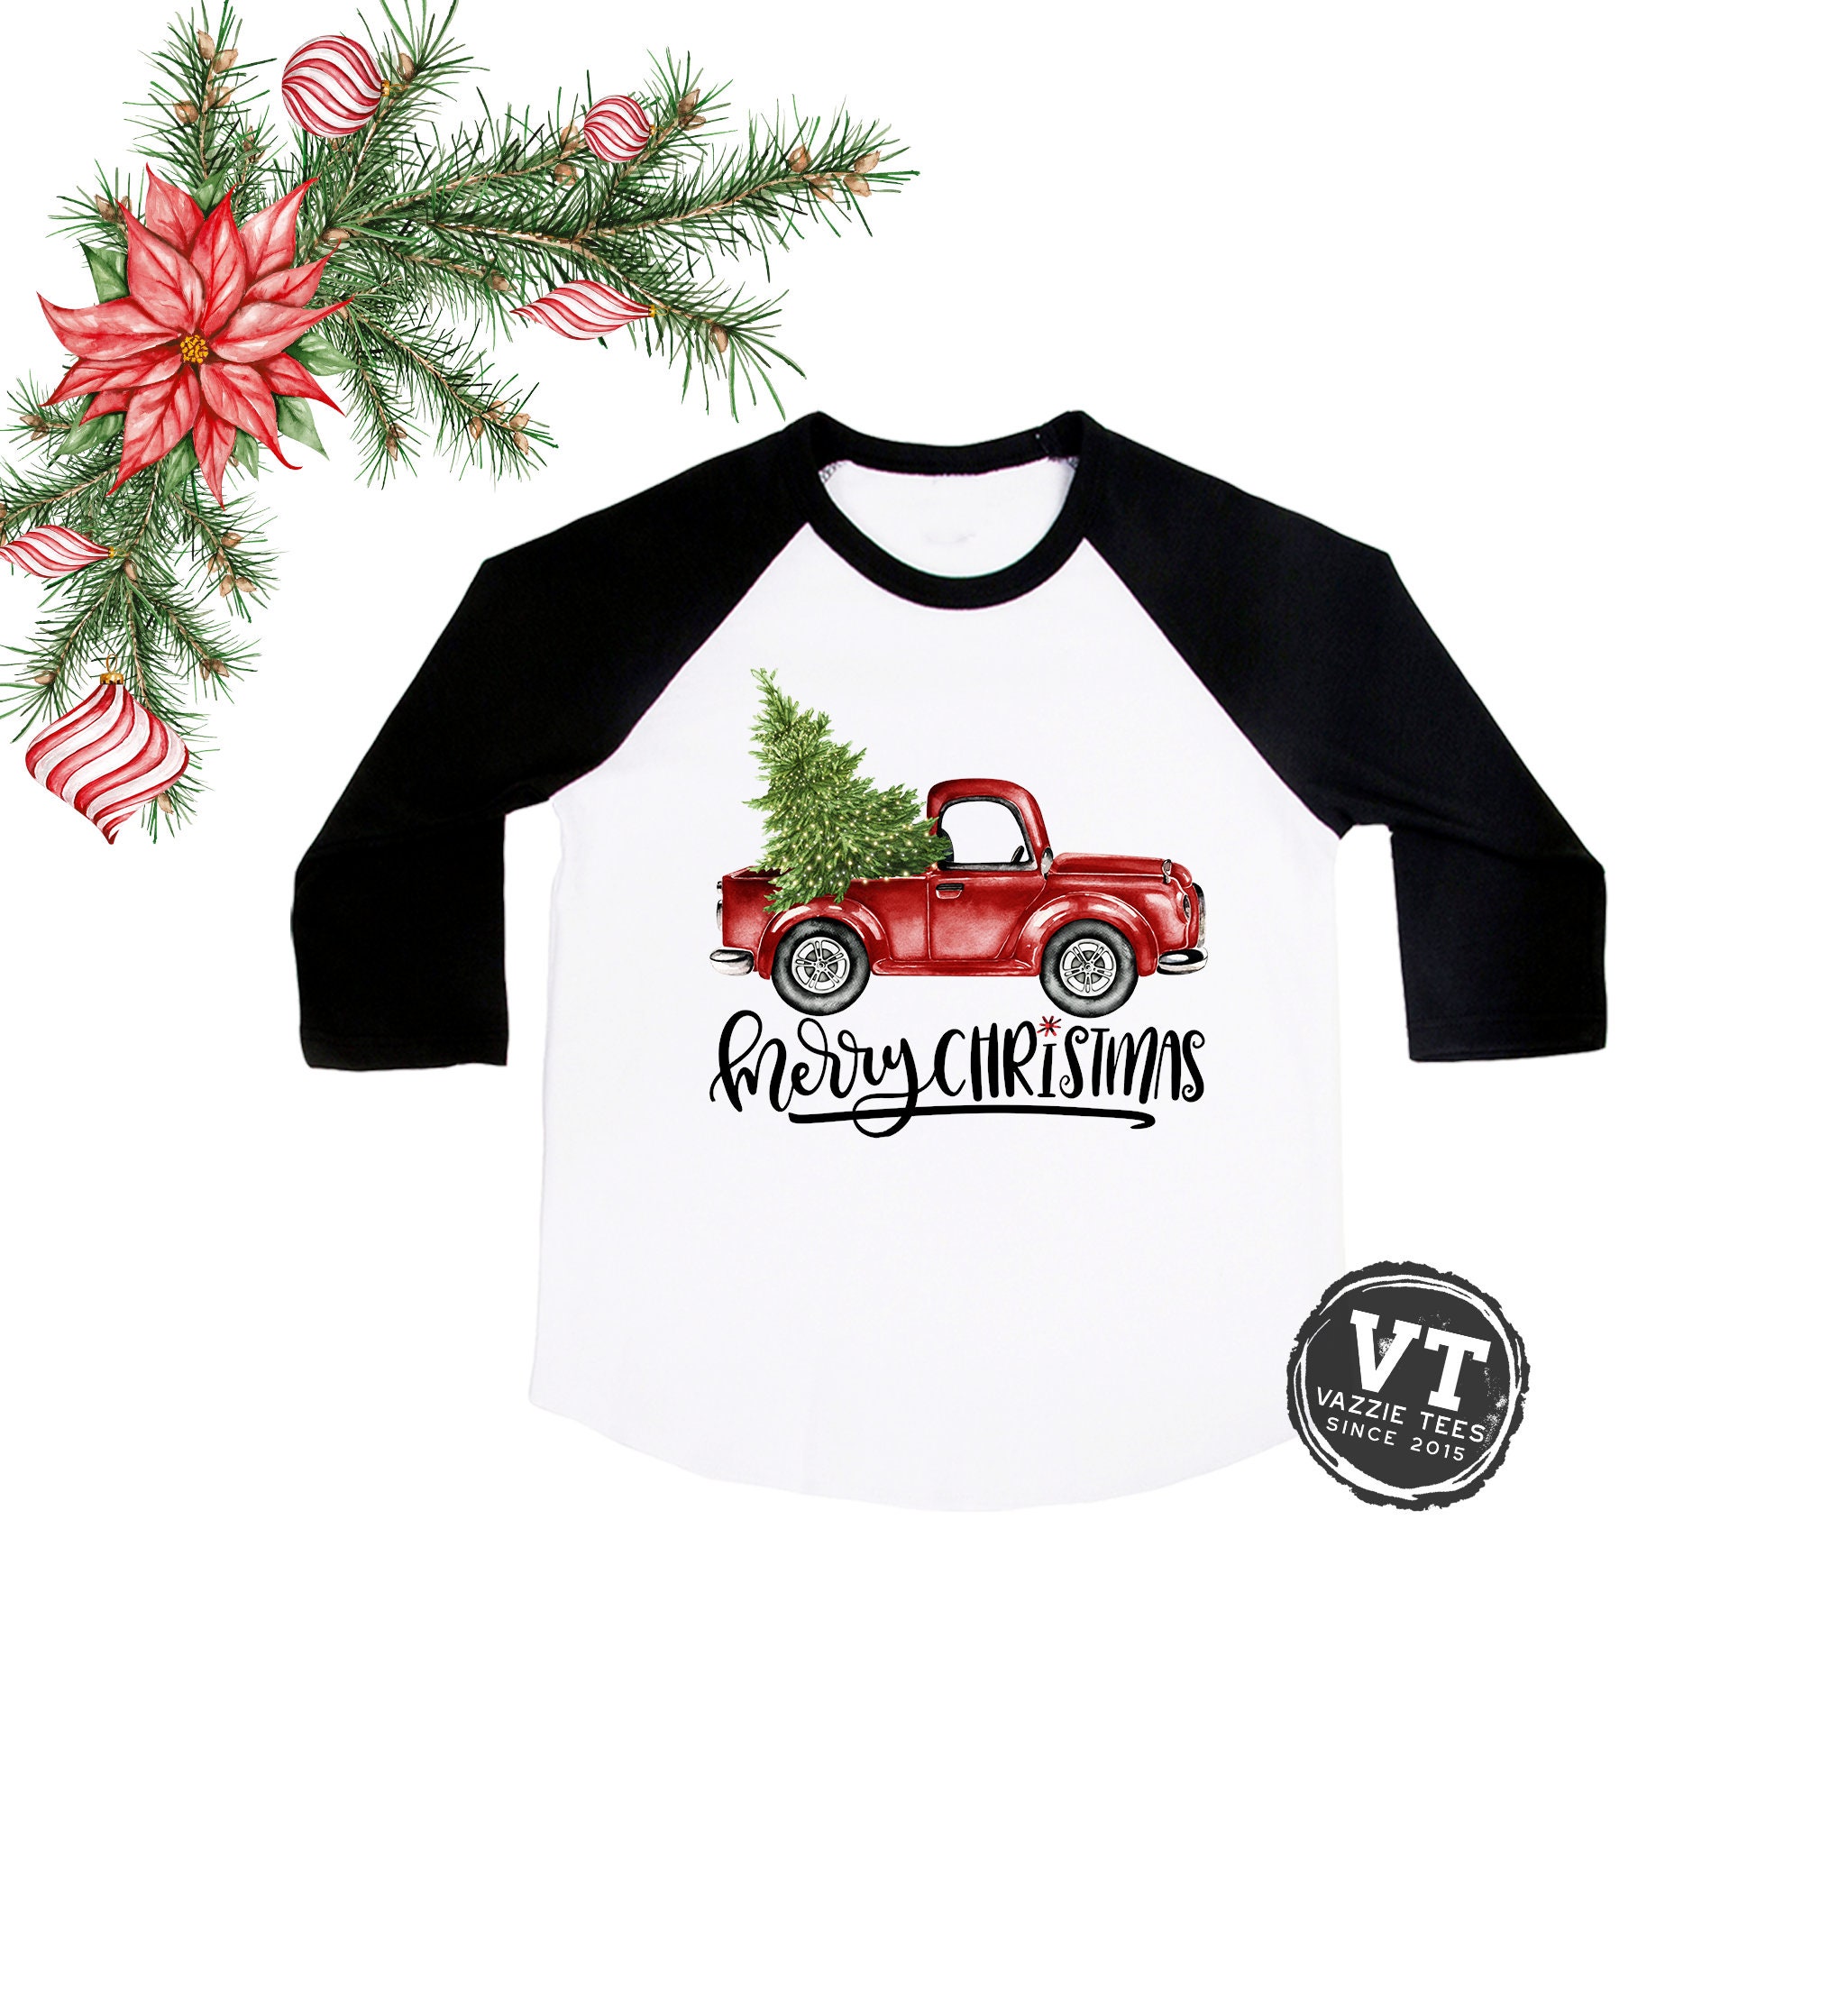 Merry Christmas Shirt Unisex Kids' Shirts Adult Shirts - Etsy